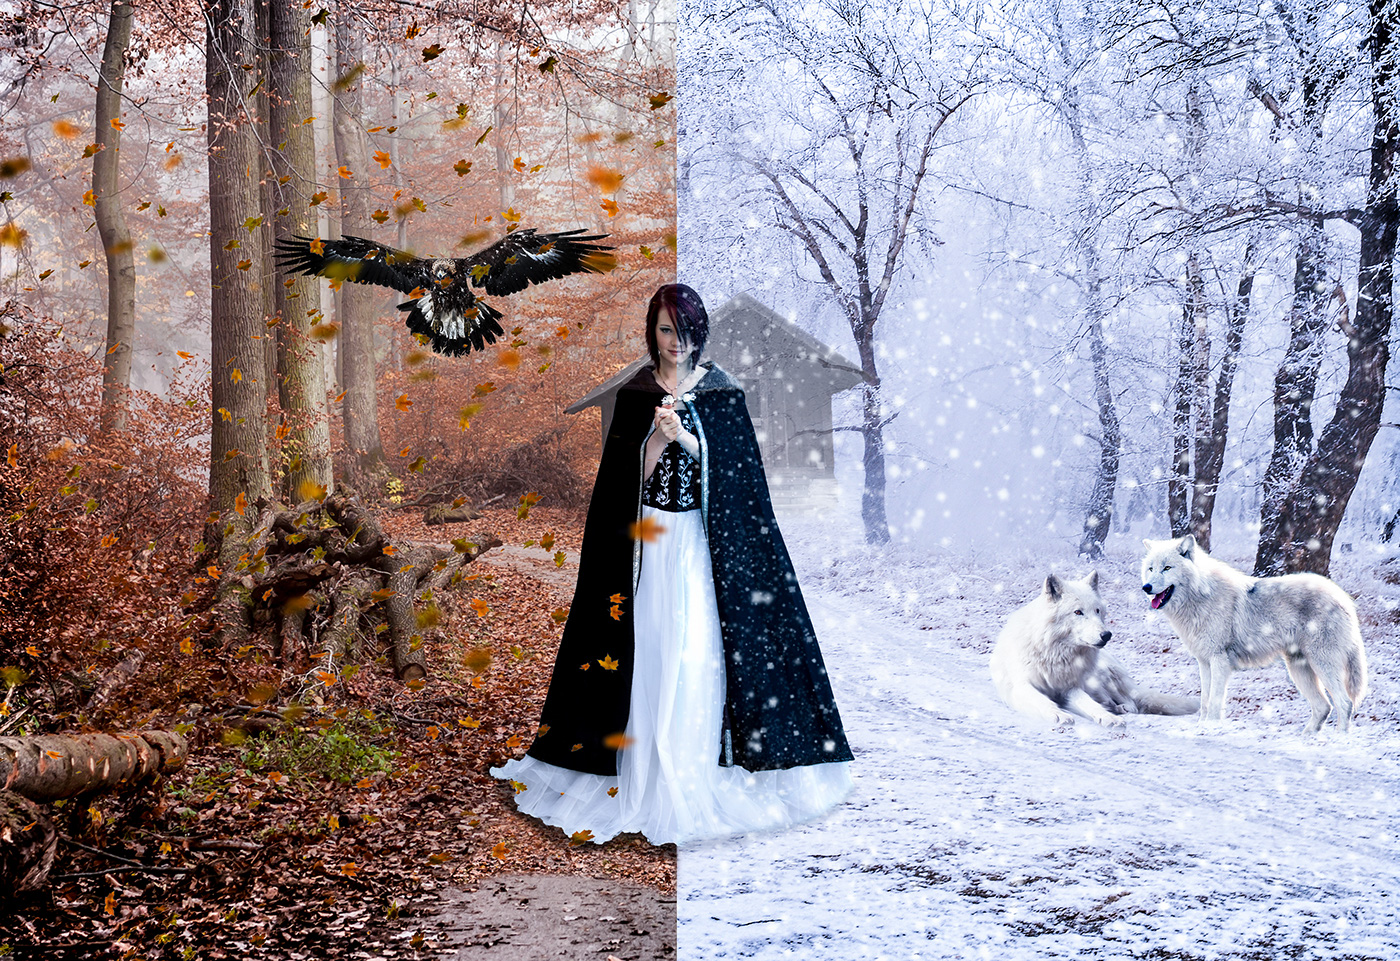 Adobe Photoshop mate painting winter autumn manipulation wolf eagle